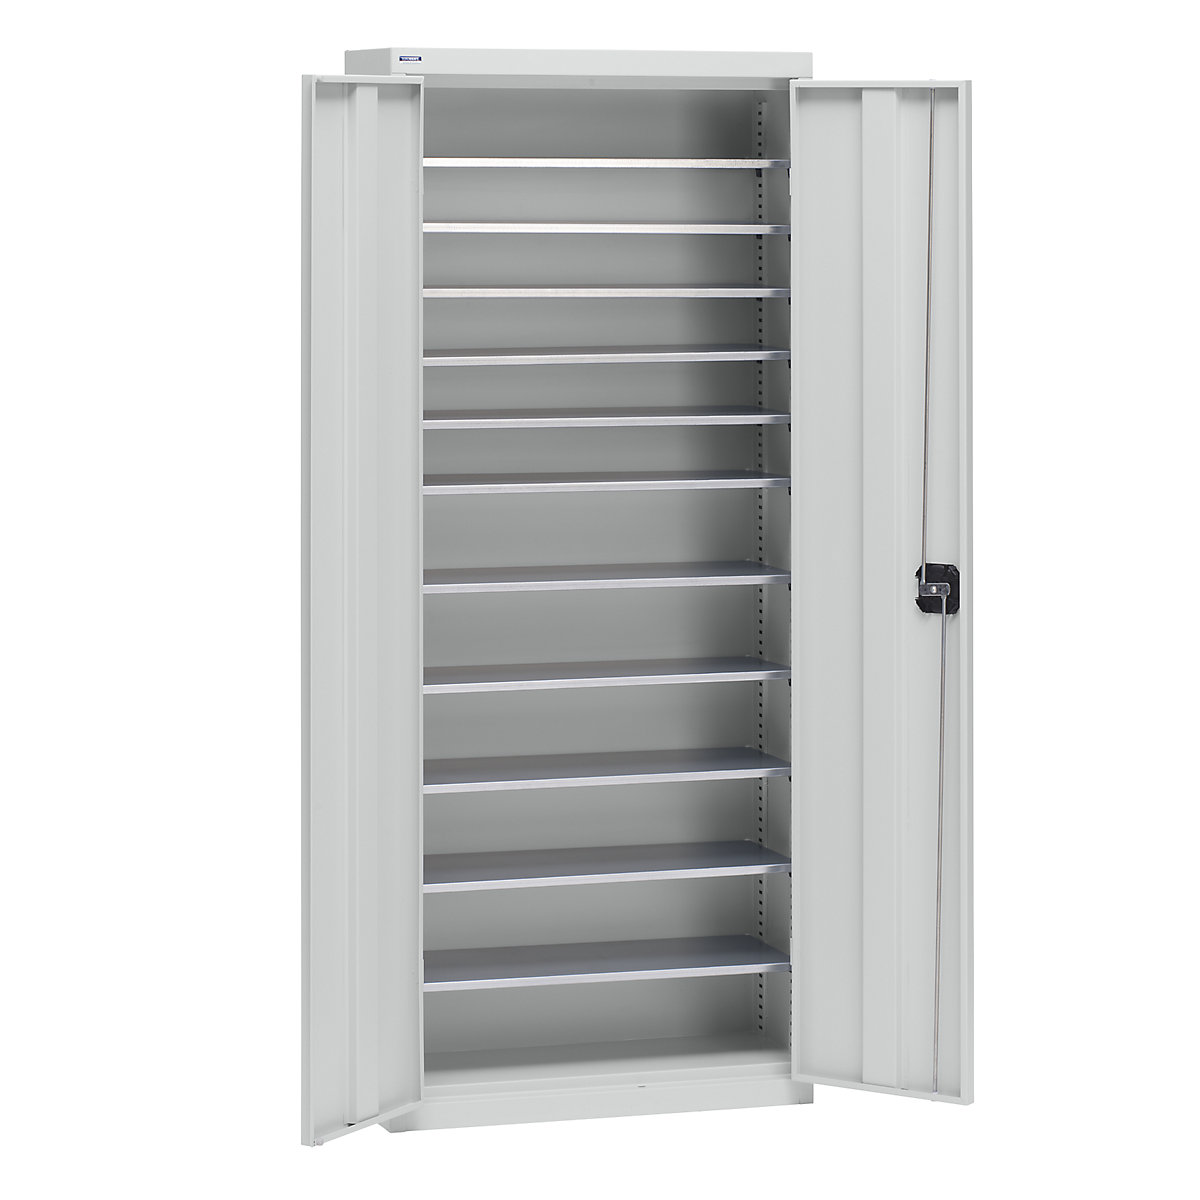 Storage cupboard made of sheet steel – eurokraft pro, height 1575 mm, light grey RAL 7035, 11 shelves-13